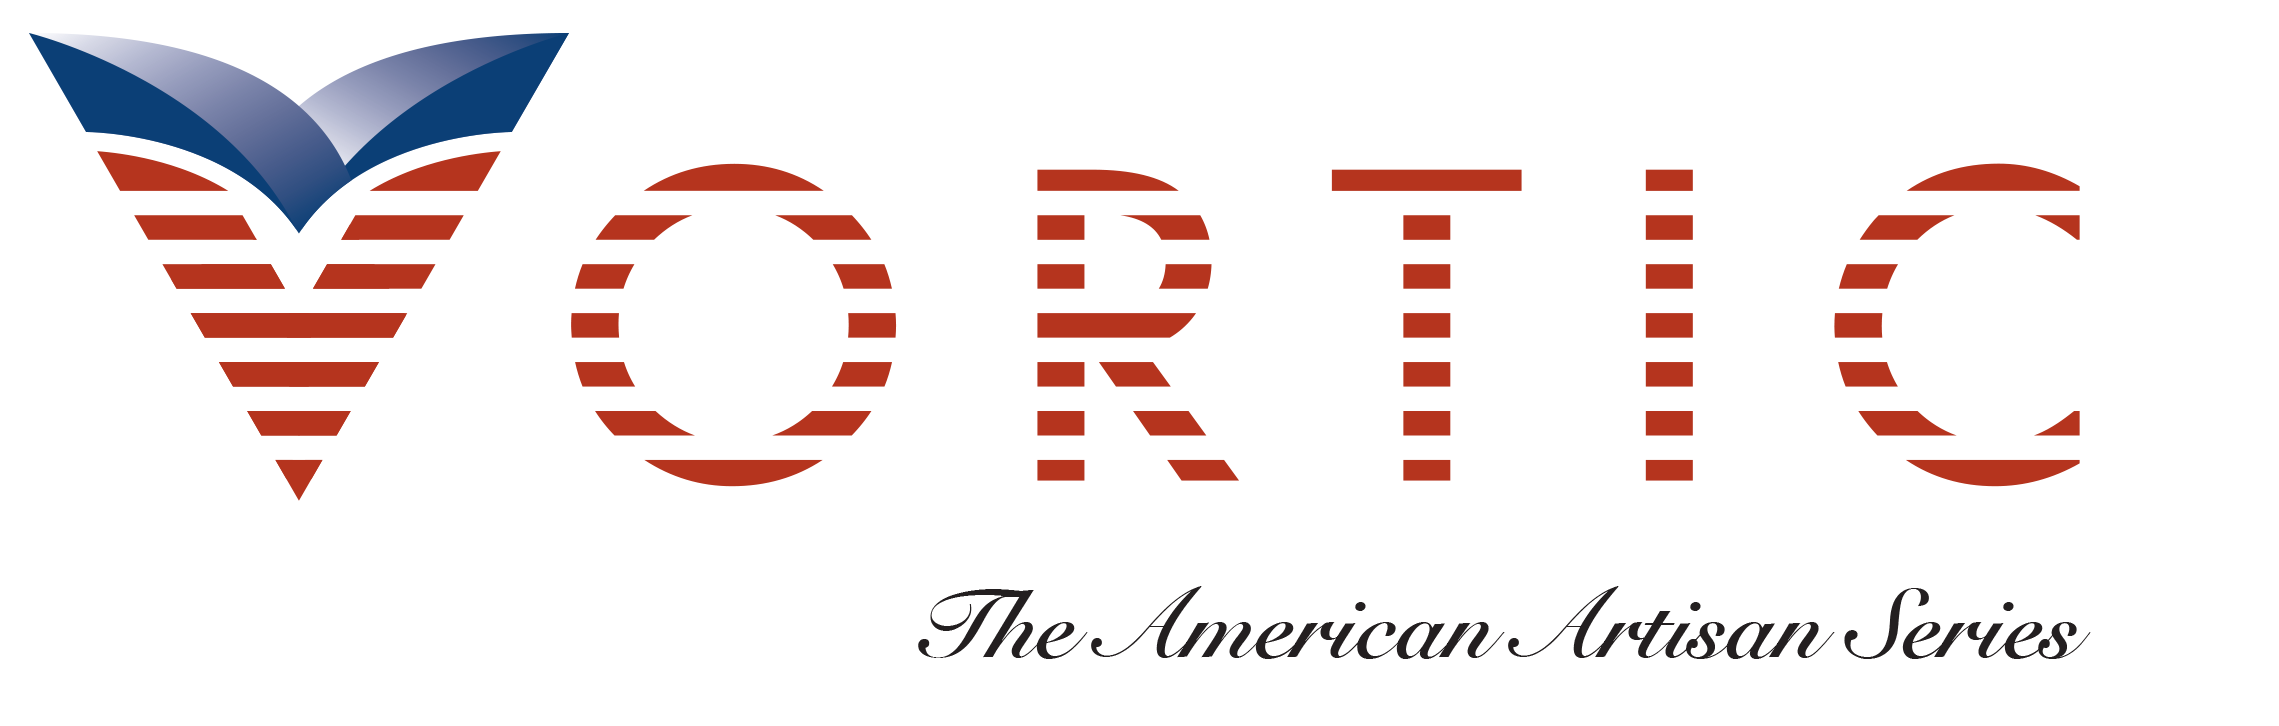 Vortic Watch Company Logo